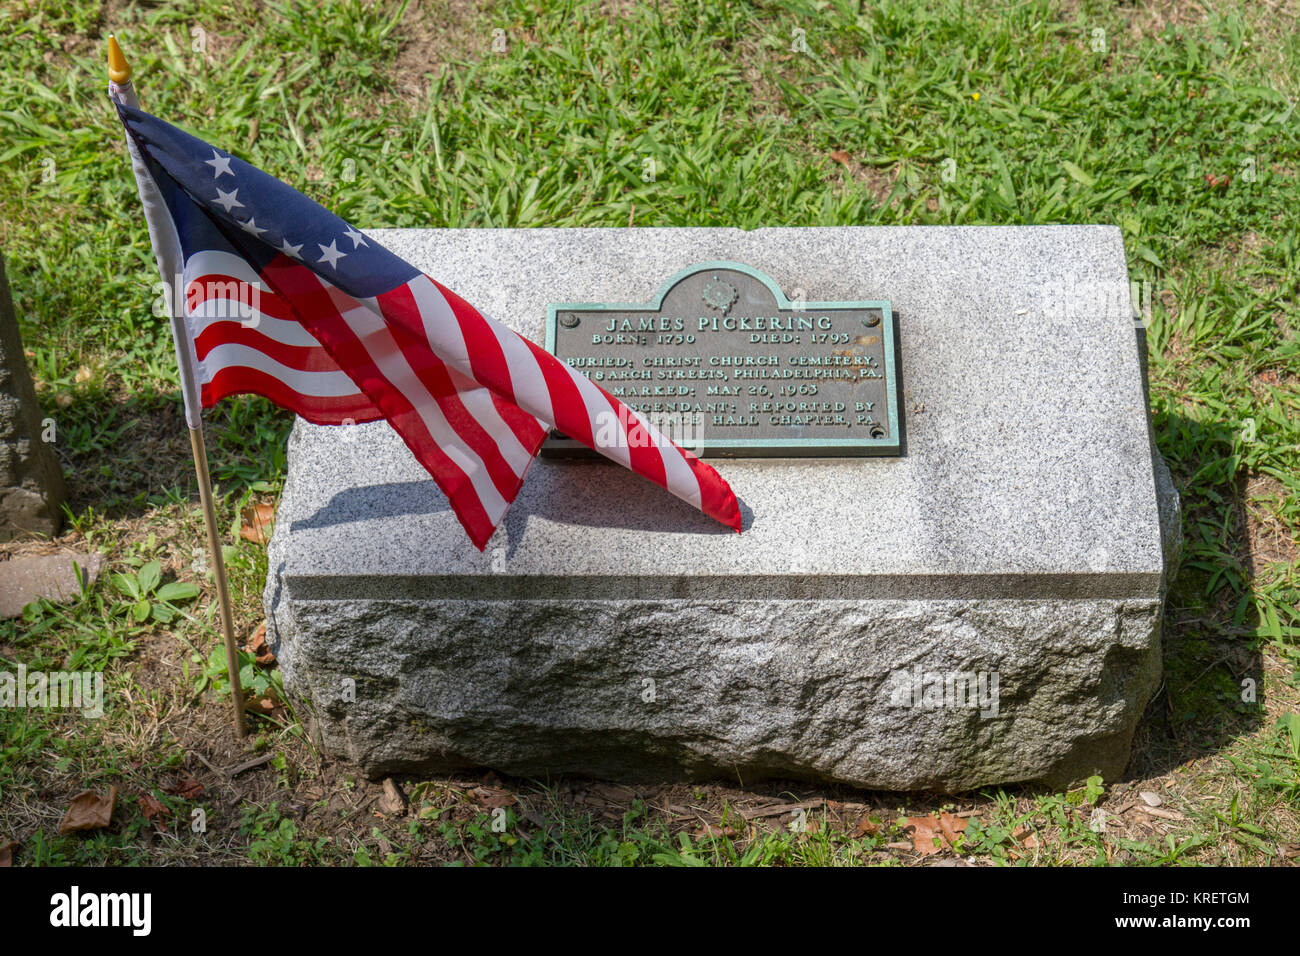 Grave of James Pickering in the Christ Church Burial Ground, Philadelphia, Pennsylvania, United States. Stock Photo